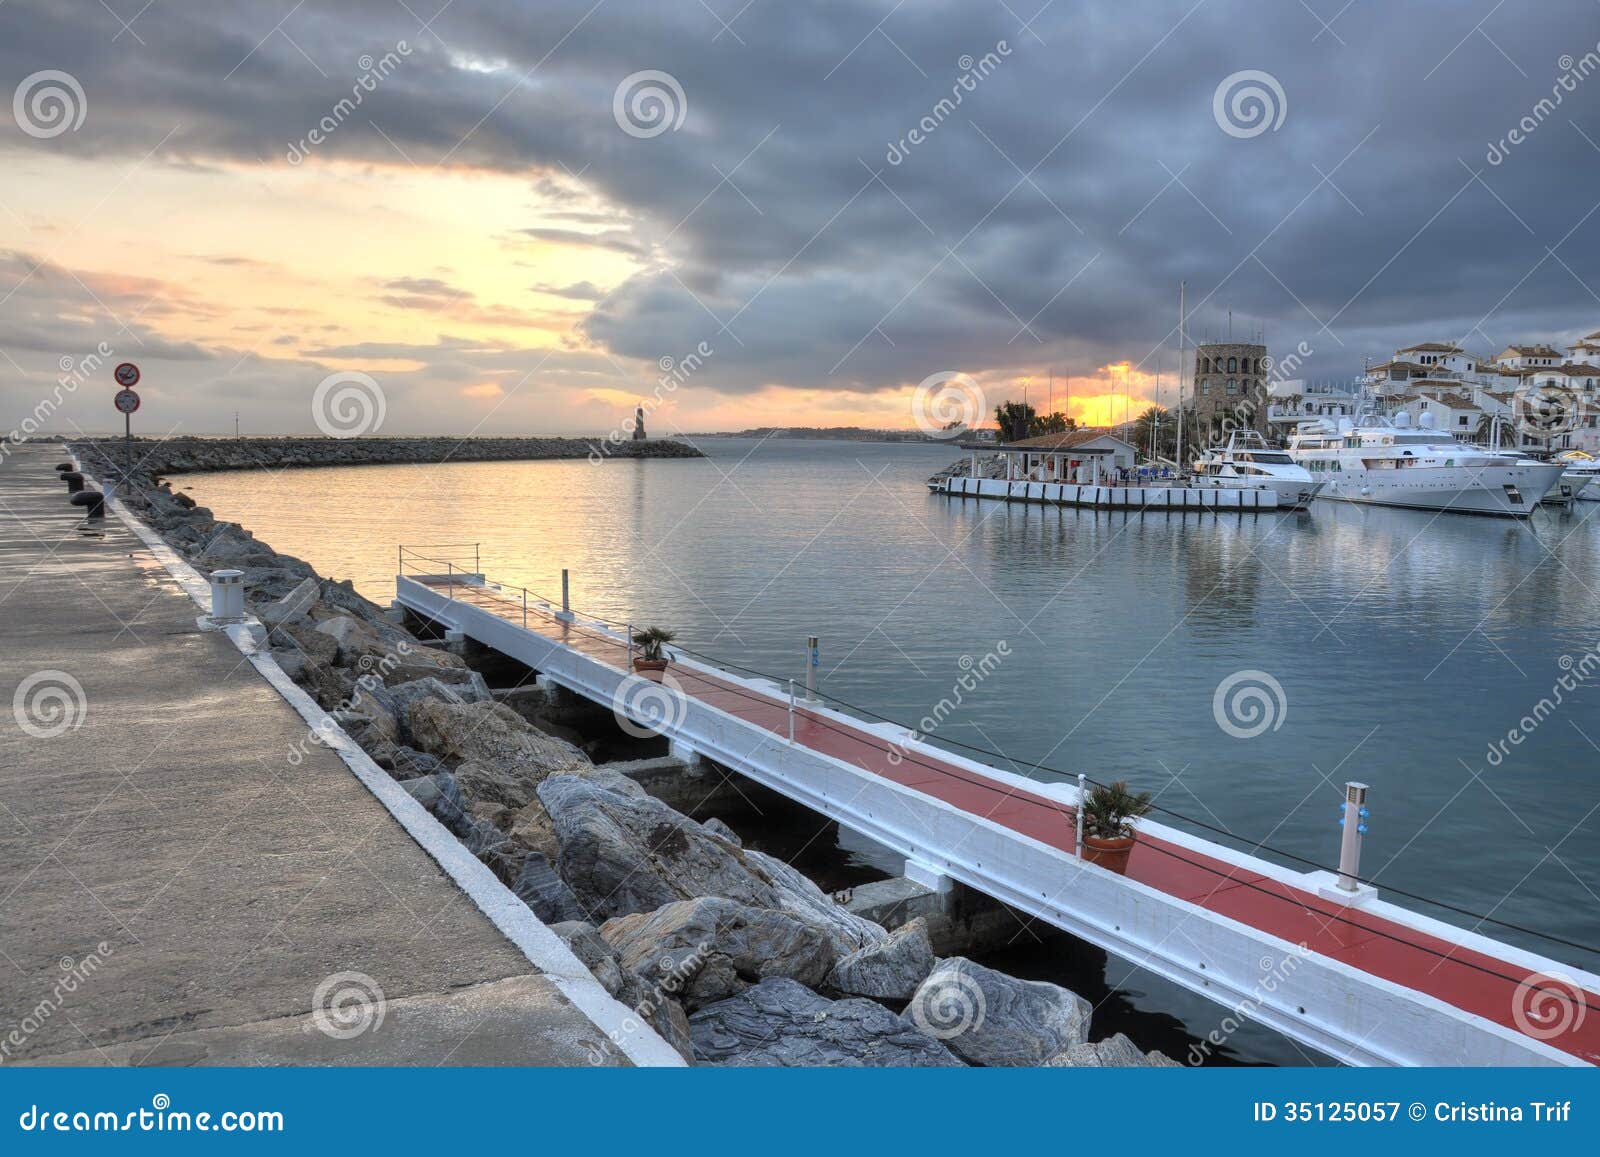 puerto banus seafront,costa del sol,spain